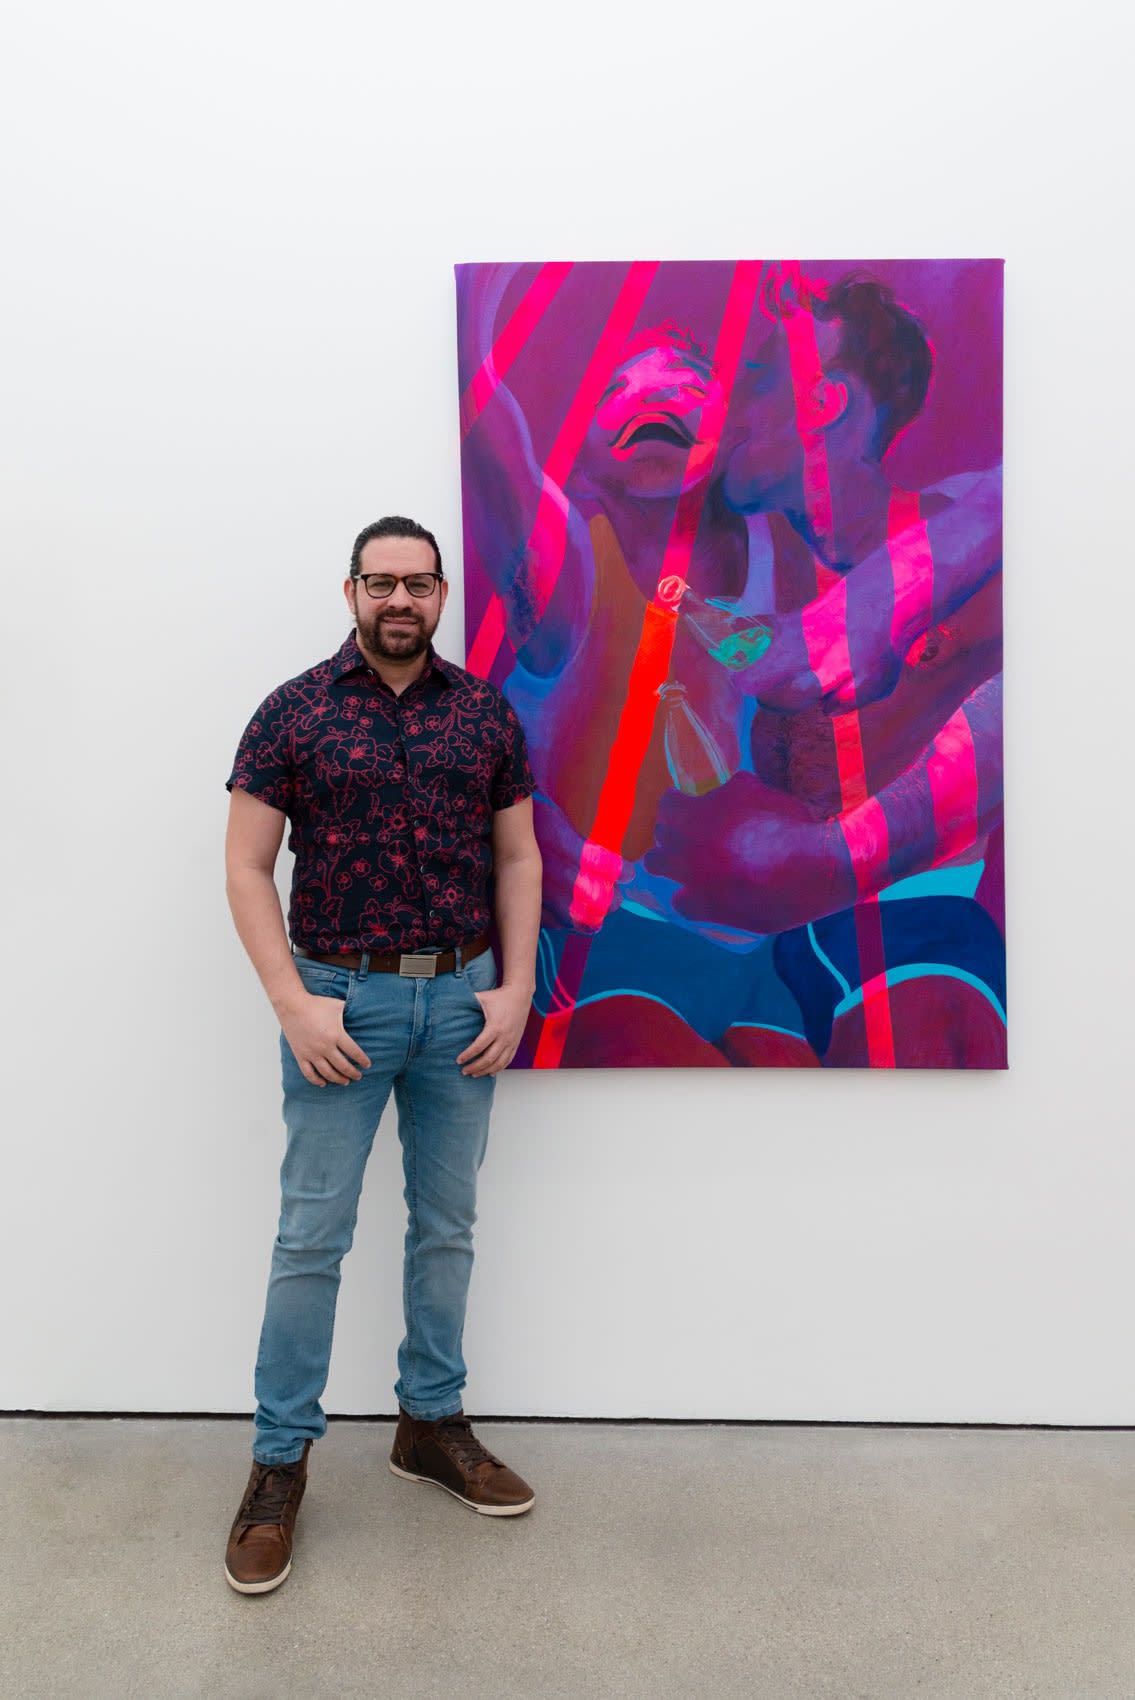 artist Jean Paul Mallozzi poses in front of his artowork